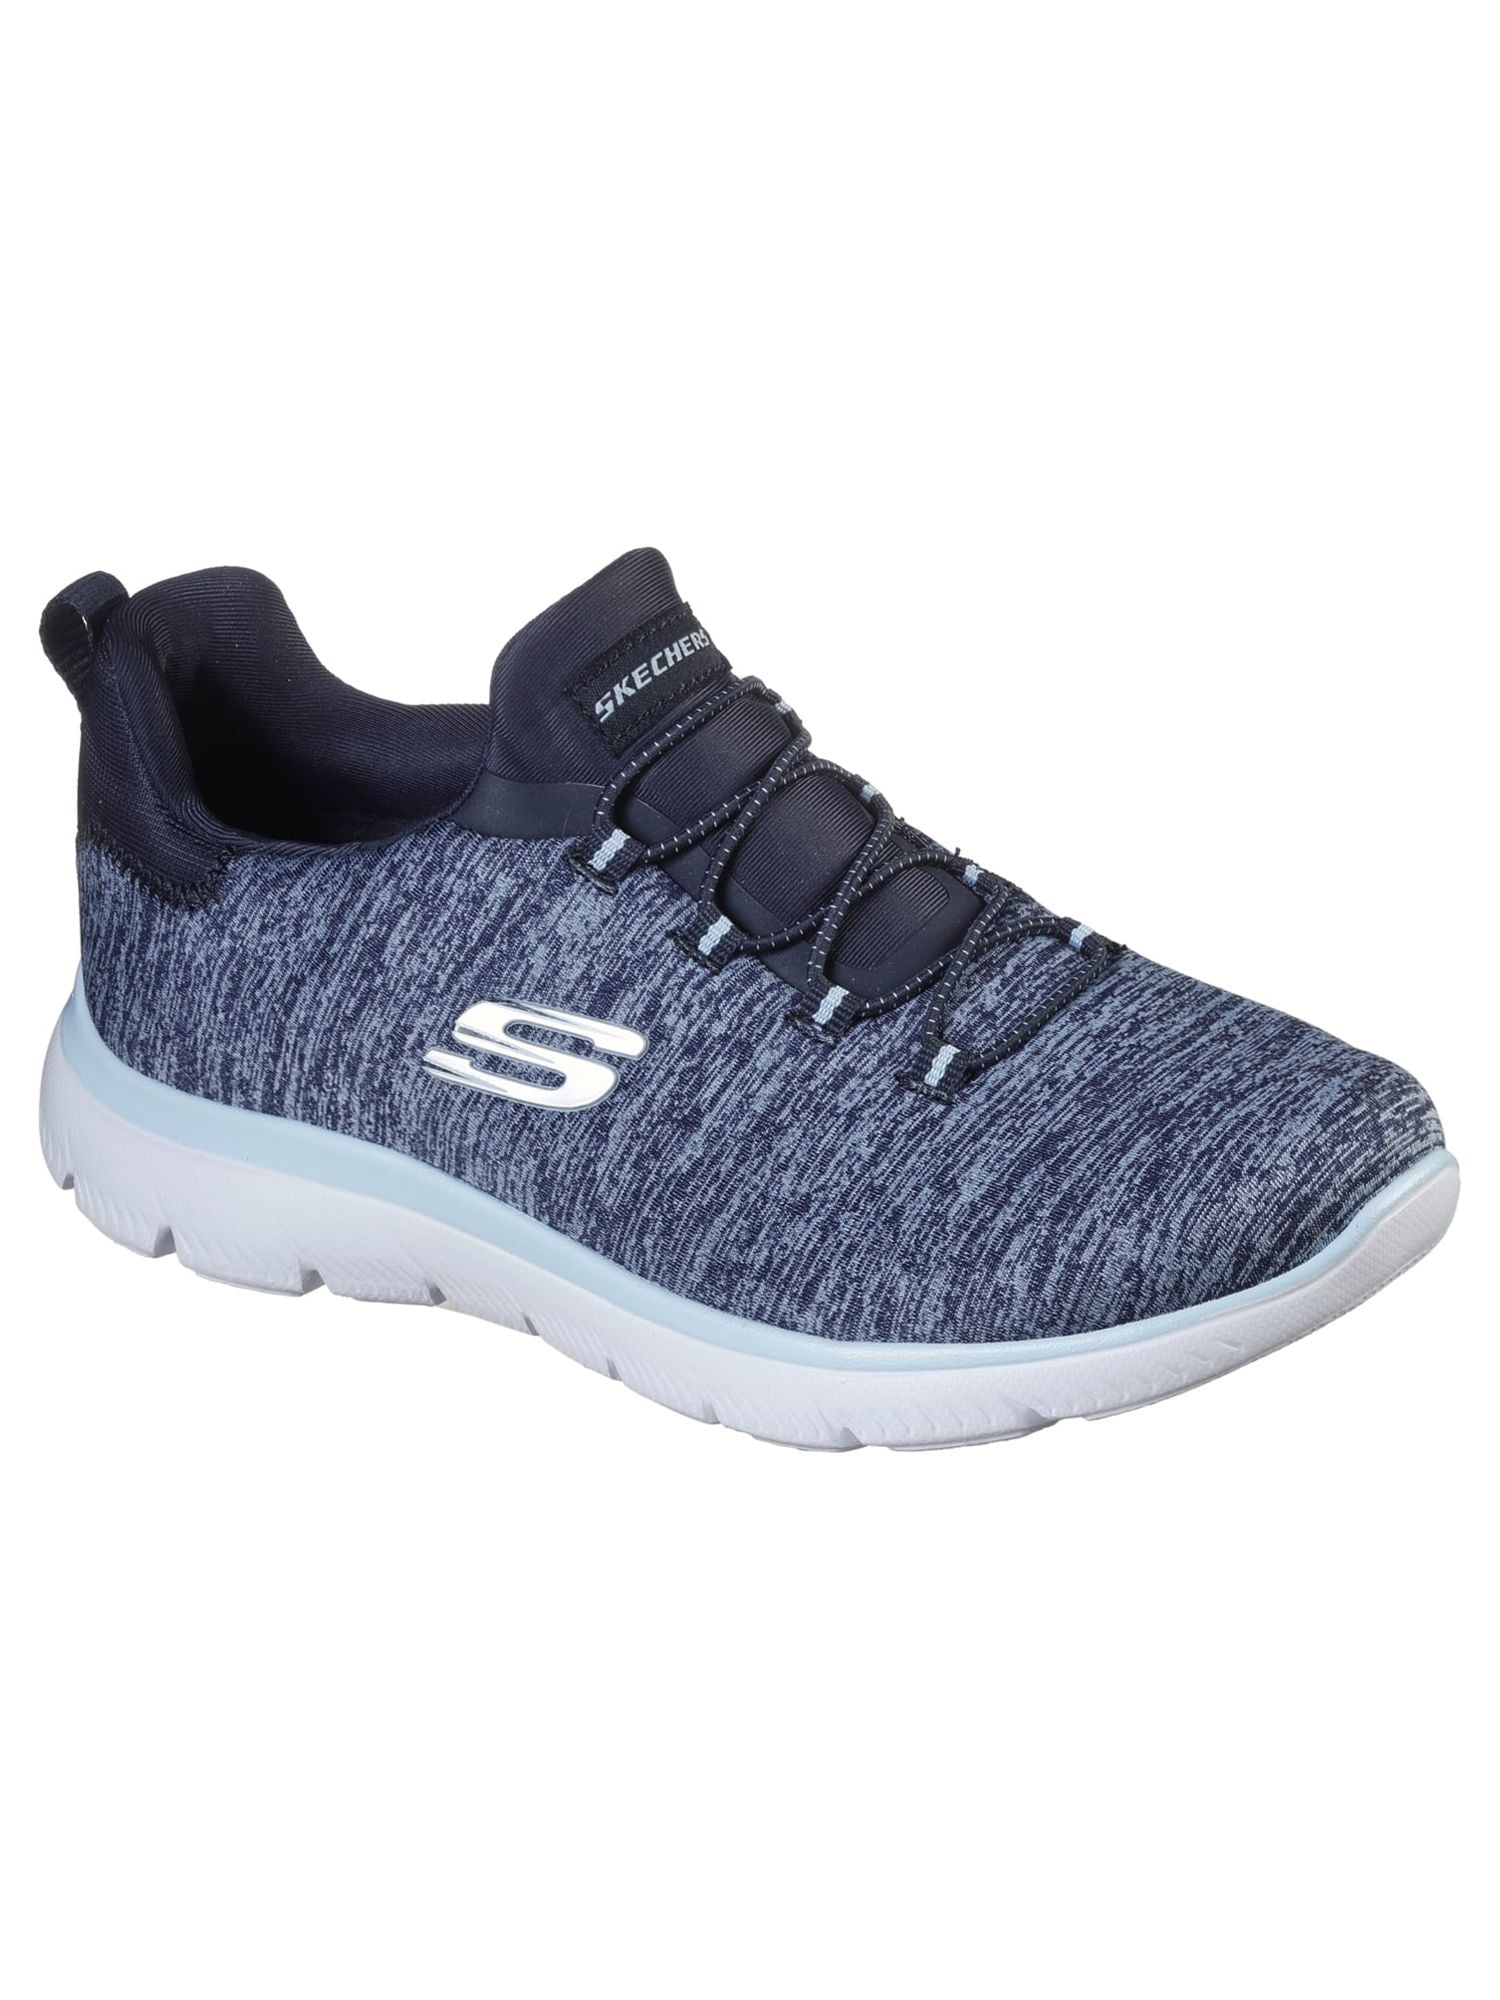 Skechers Women's Sport Summits Quick Getaway Slip-on Athletic Sneaker, Wide  Width Available 